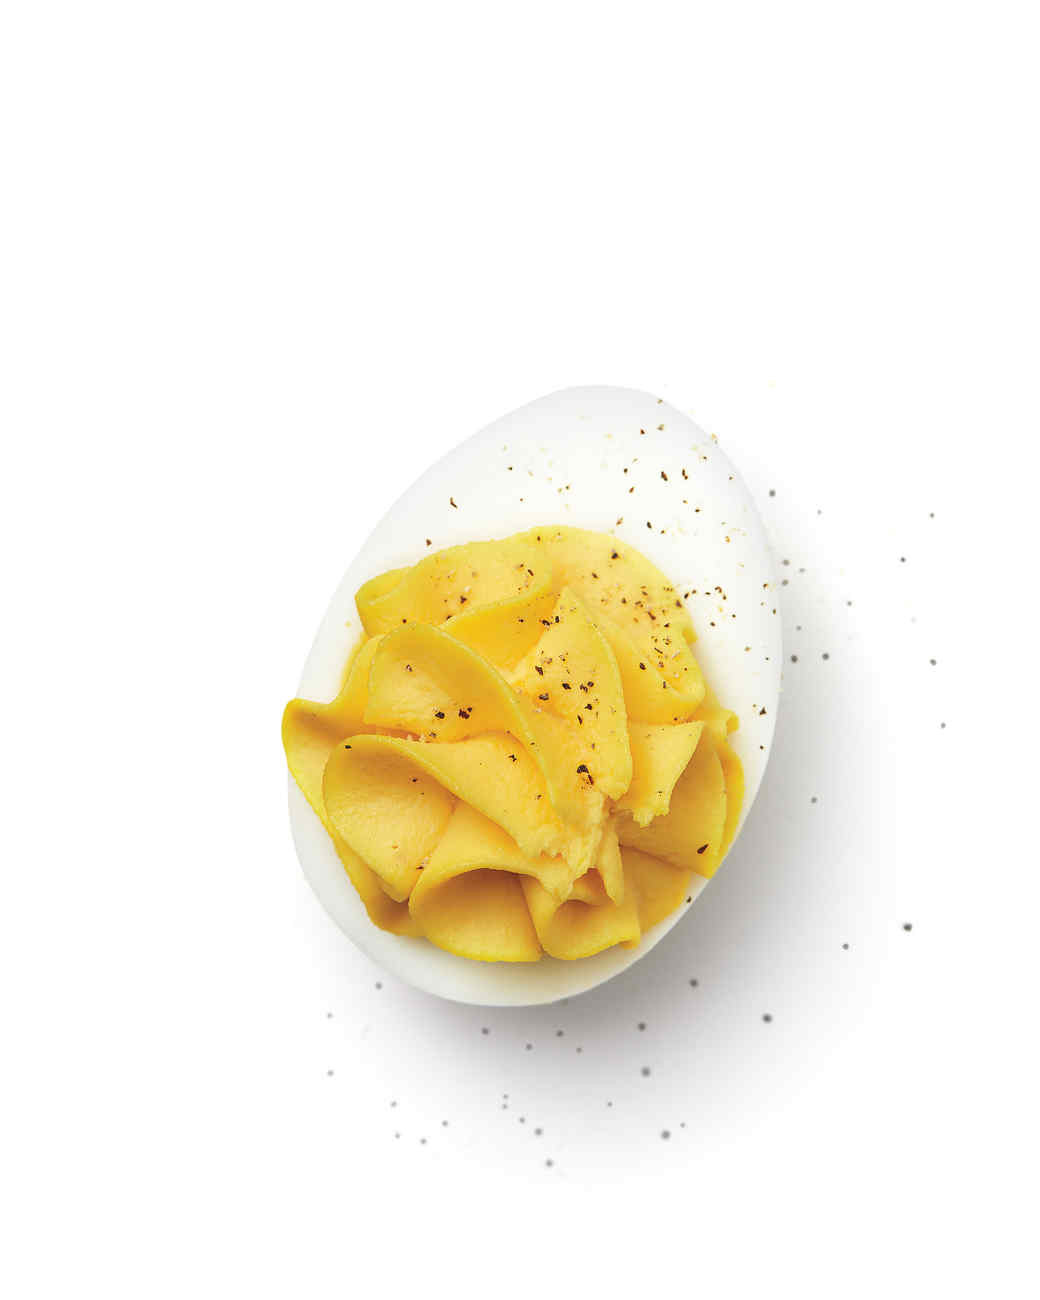 Best Deviled Eggs Martha Stewart
 deviled eggs recipe martha stewart